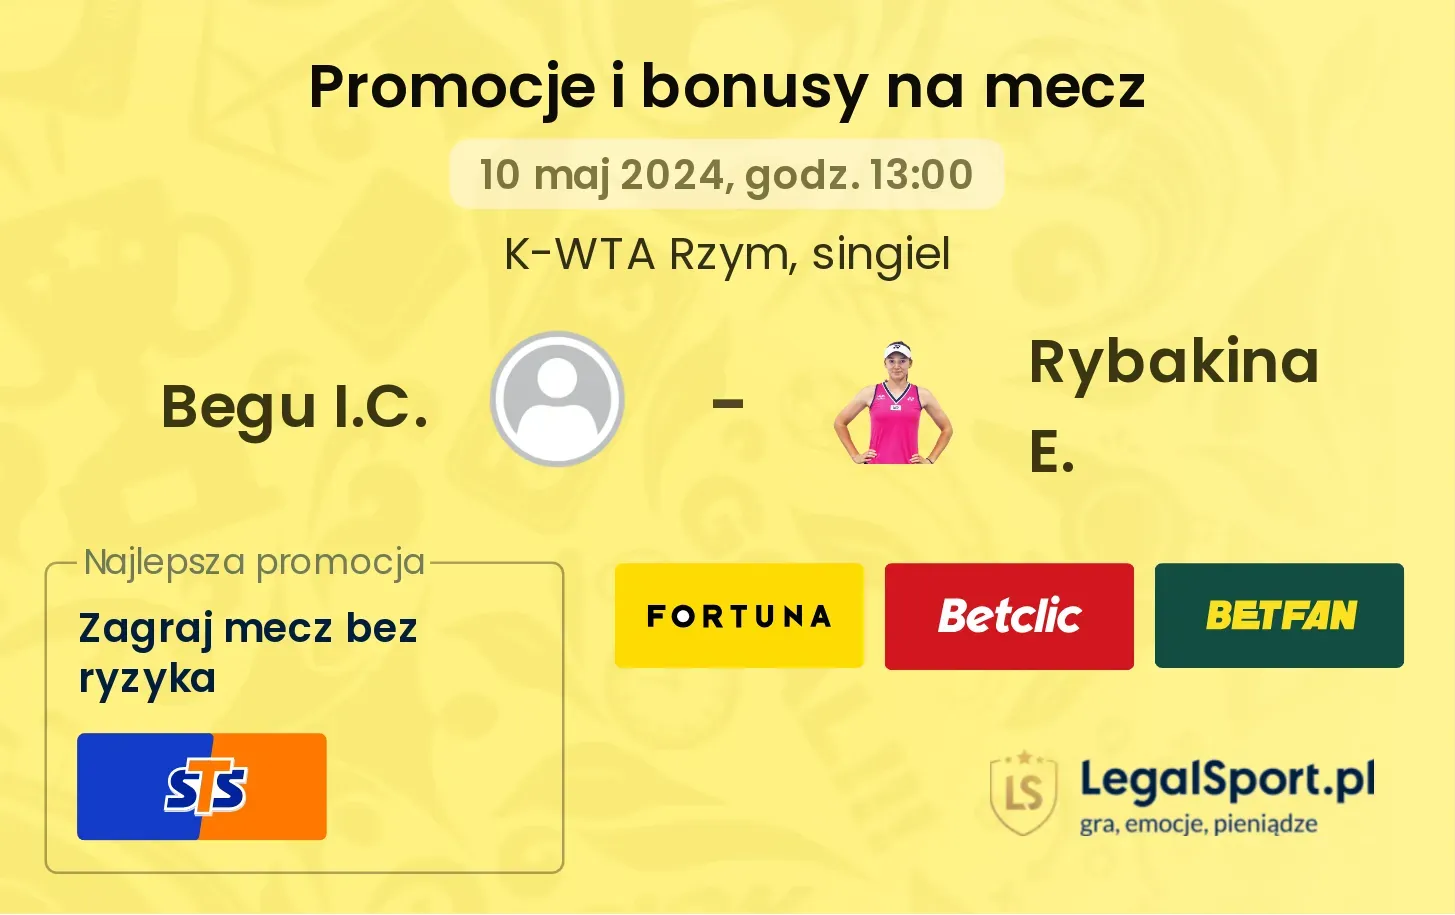 Begu I.C. - Rybakina E. promocje bonusy na mecz